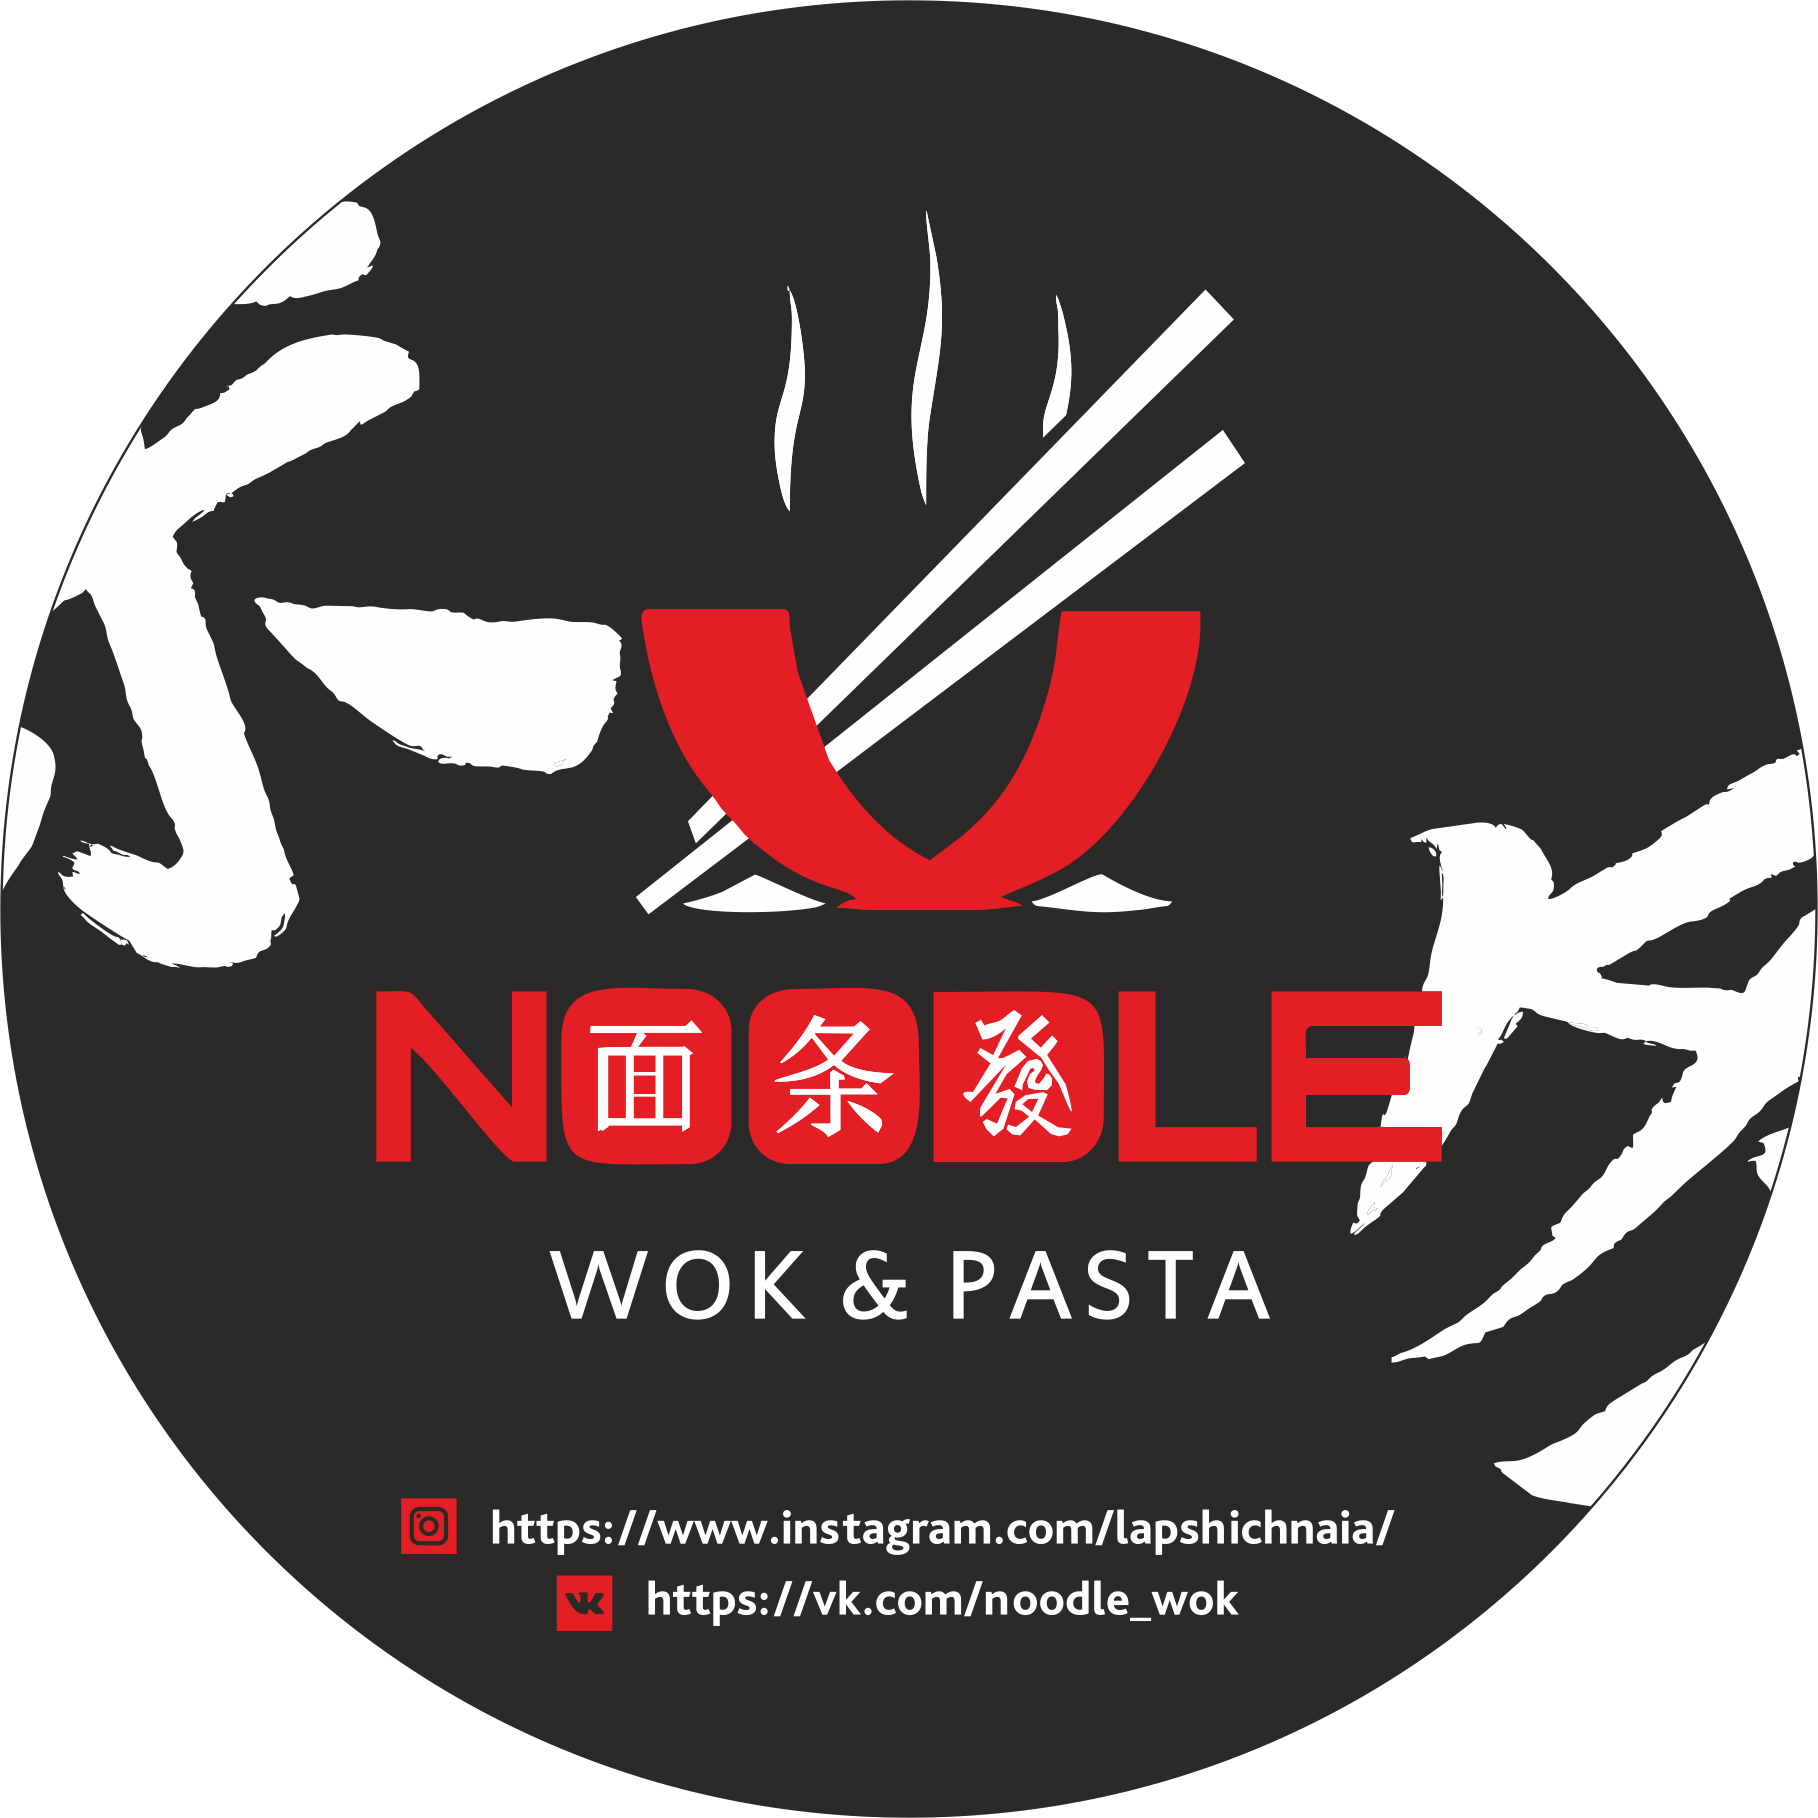 NOODLE wokw&pasta